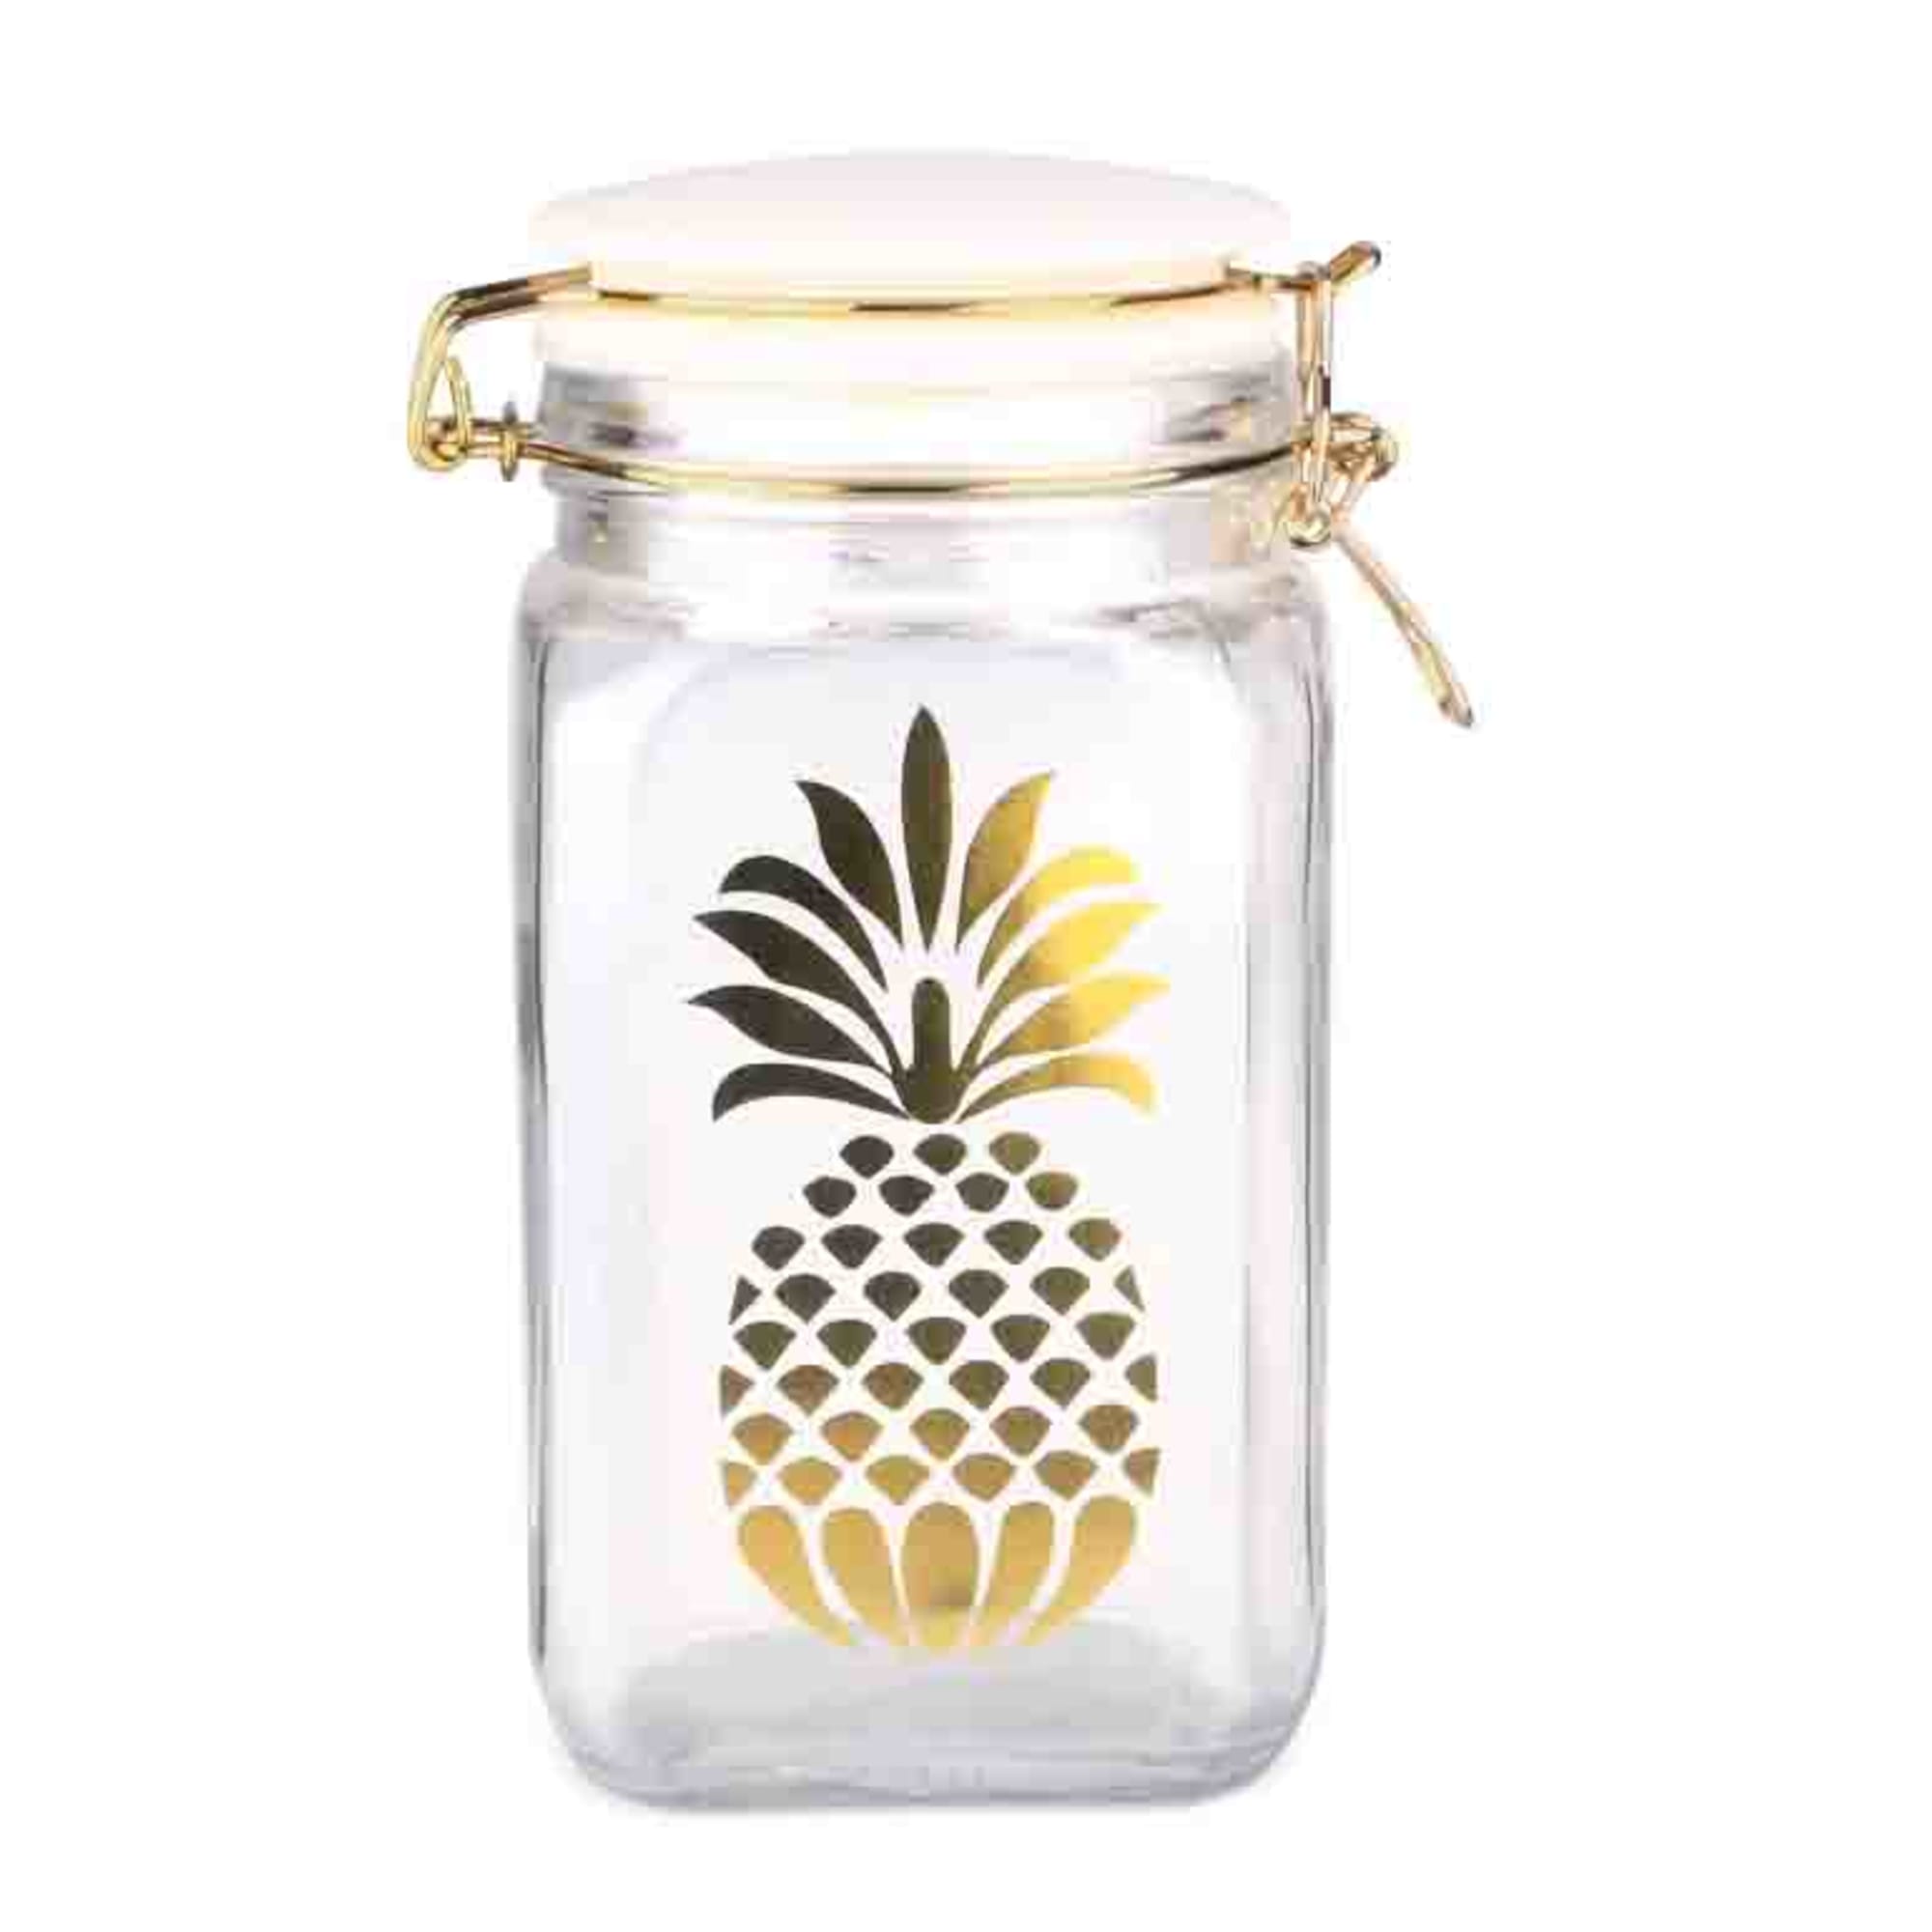 Home Basics Pineapple Sunshine 71 oz. Glass Canister $4 EACH, CASE PACK OF 12